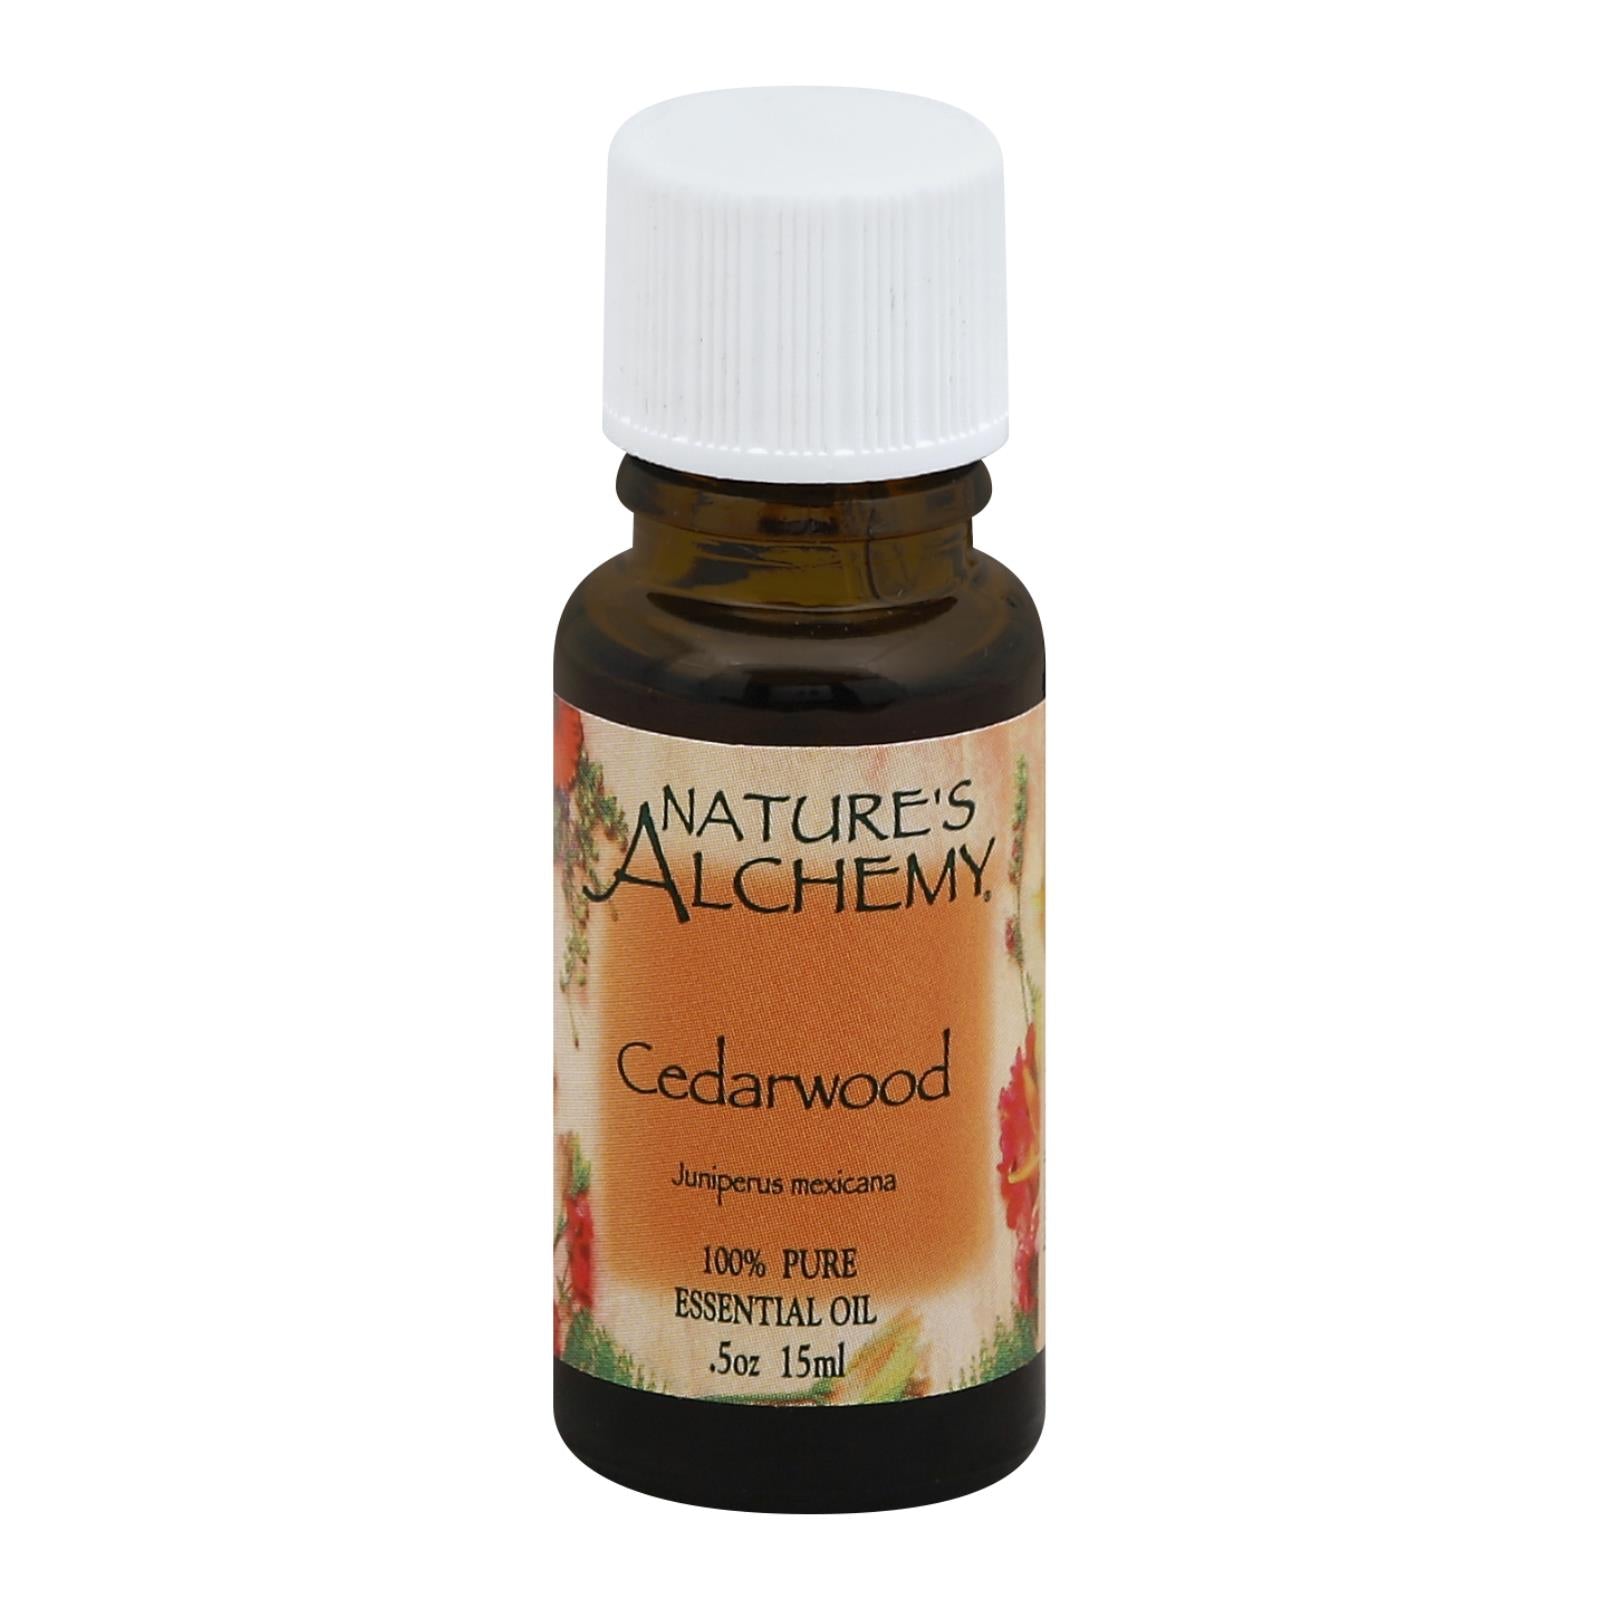 Nature's Alchemy 100% Pure Essential Oil Cedarwood - 0.5 Fl Oz